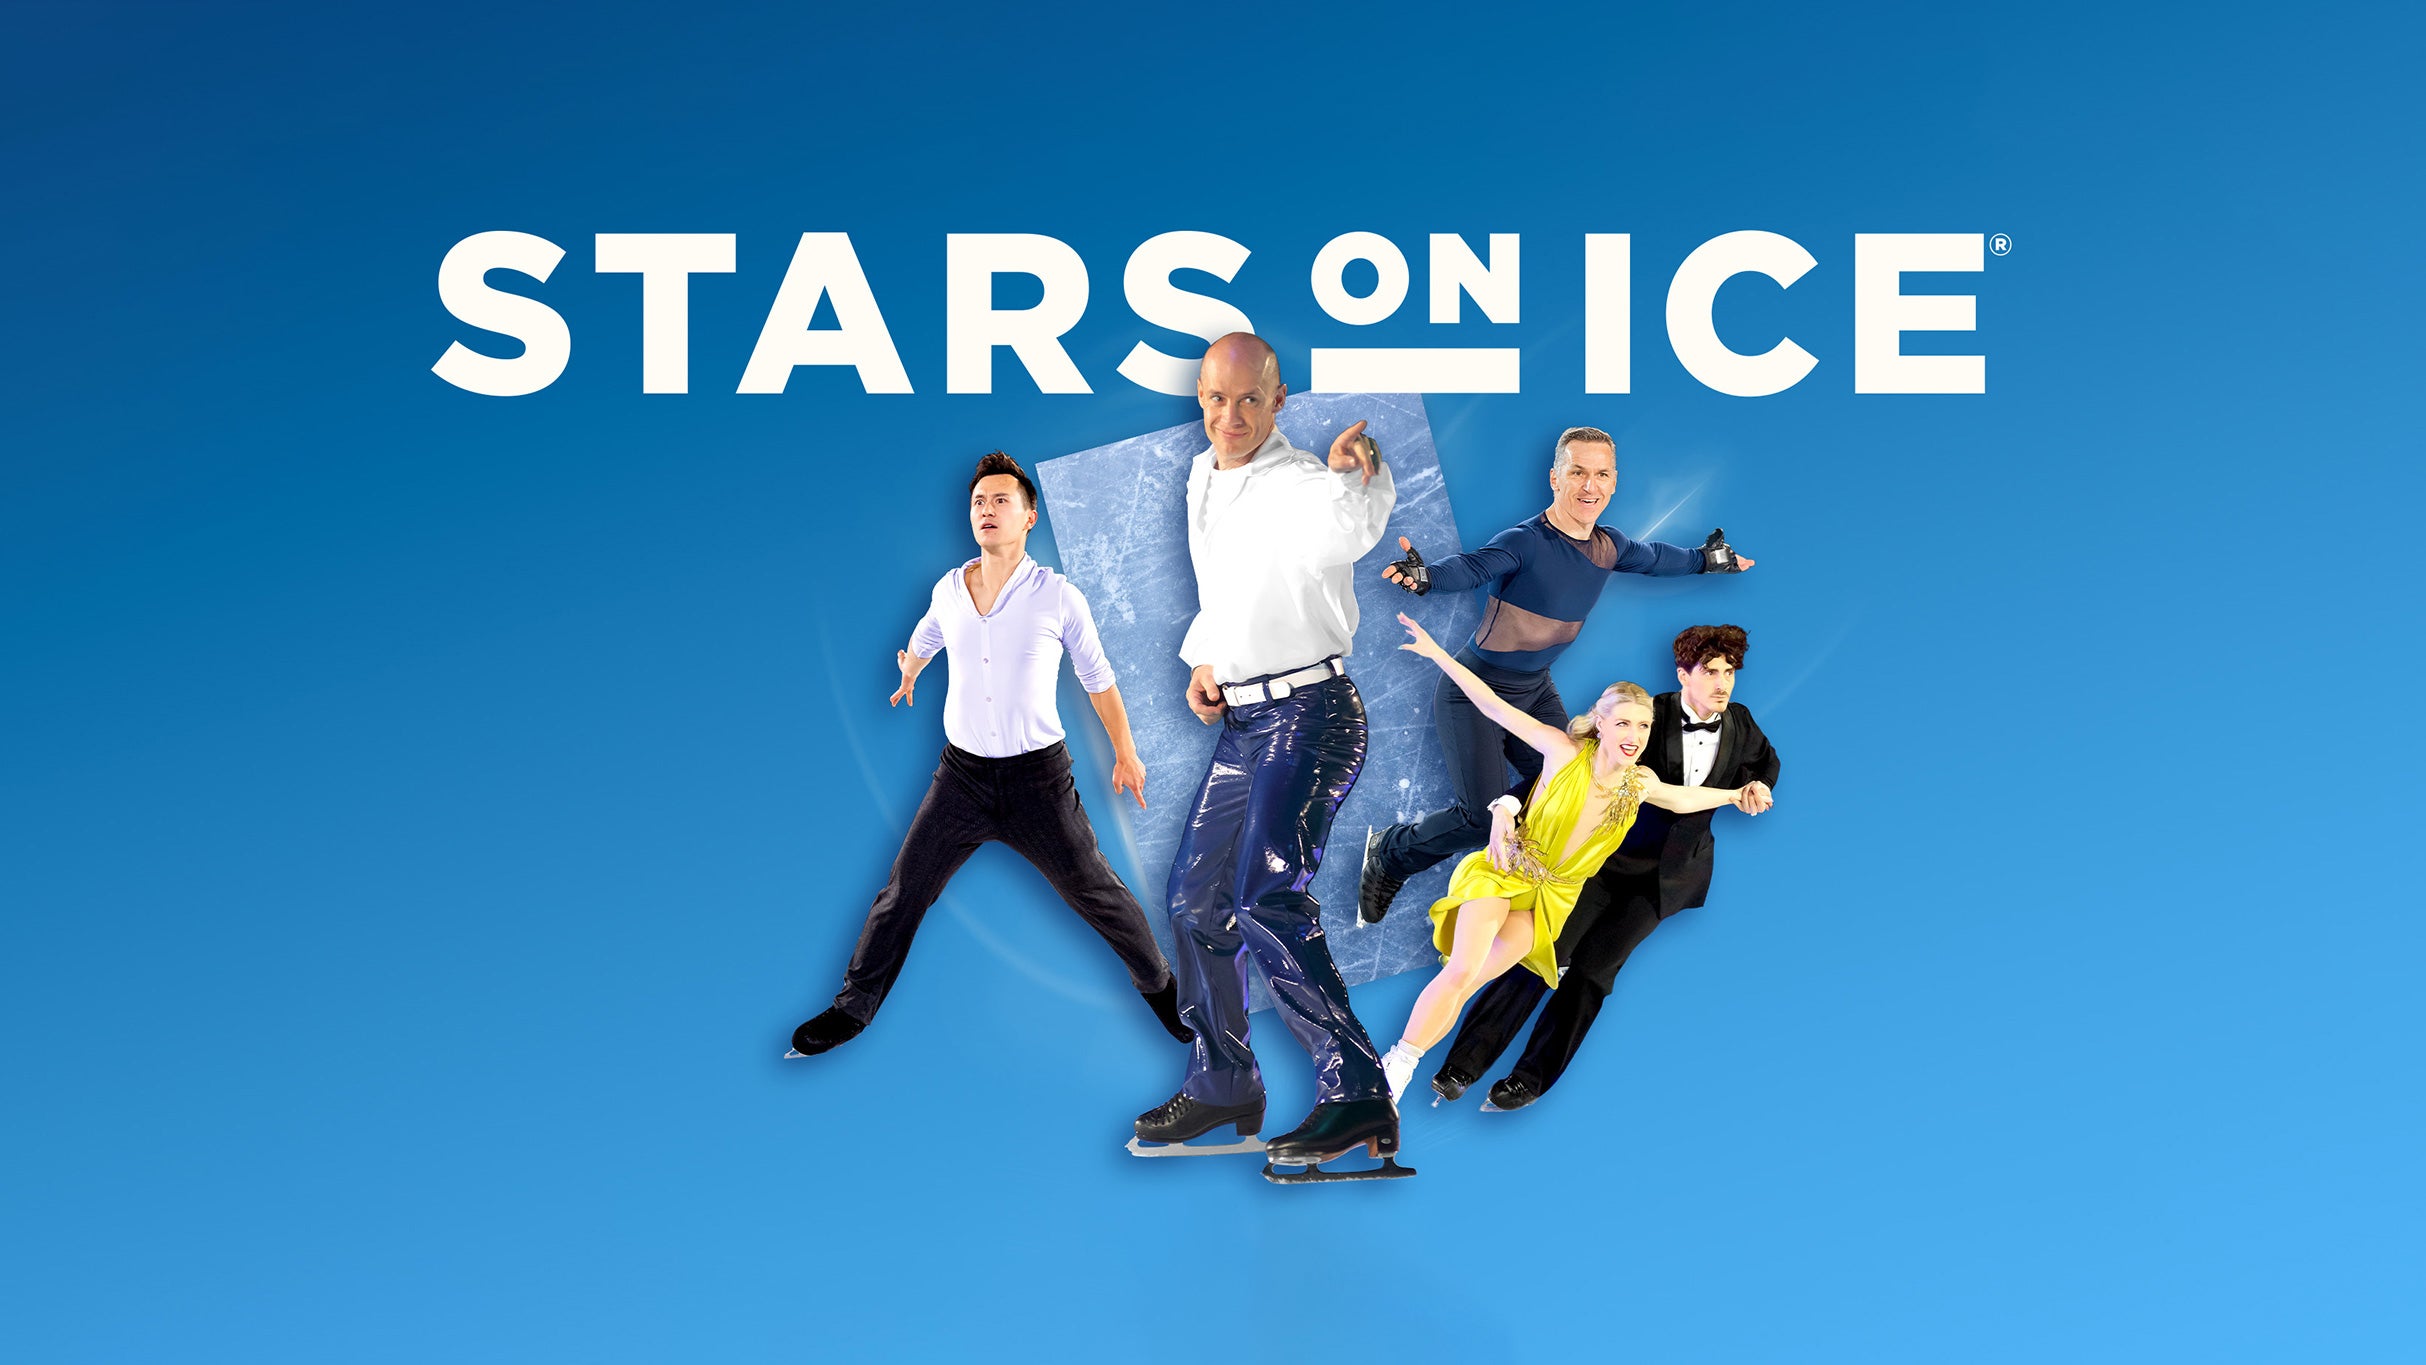 Stars on Ice - Canada in Calgary promo photo for Presales presale offer code